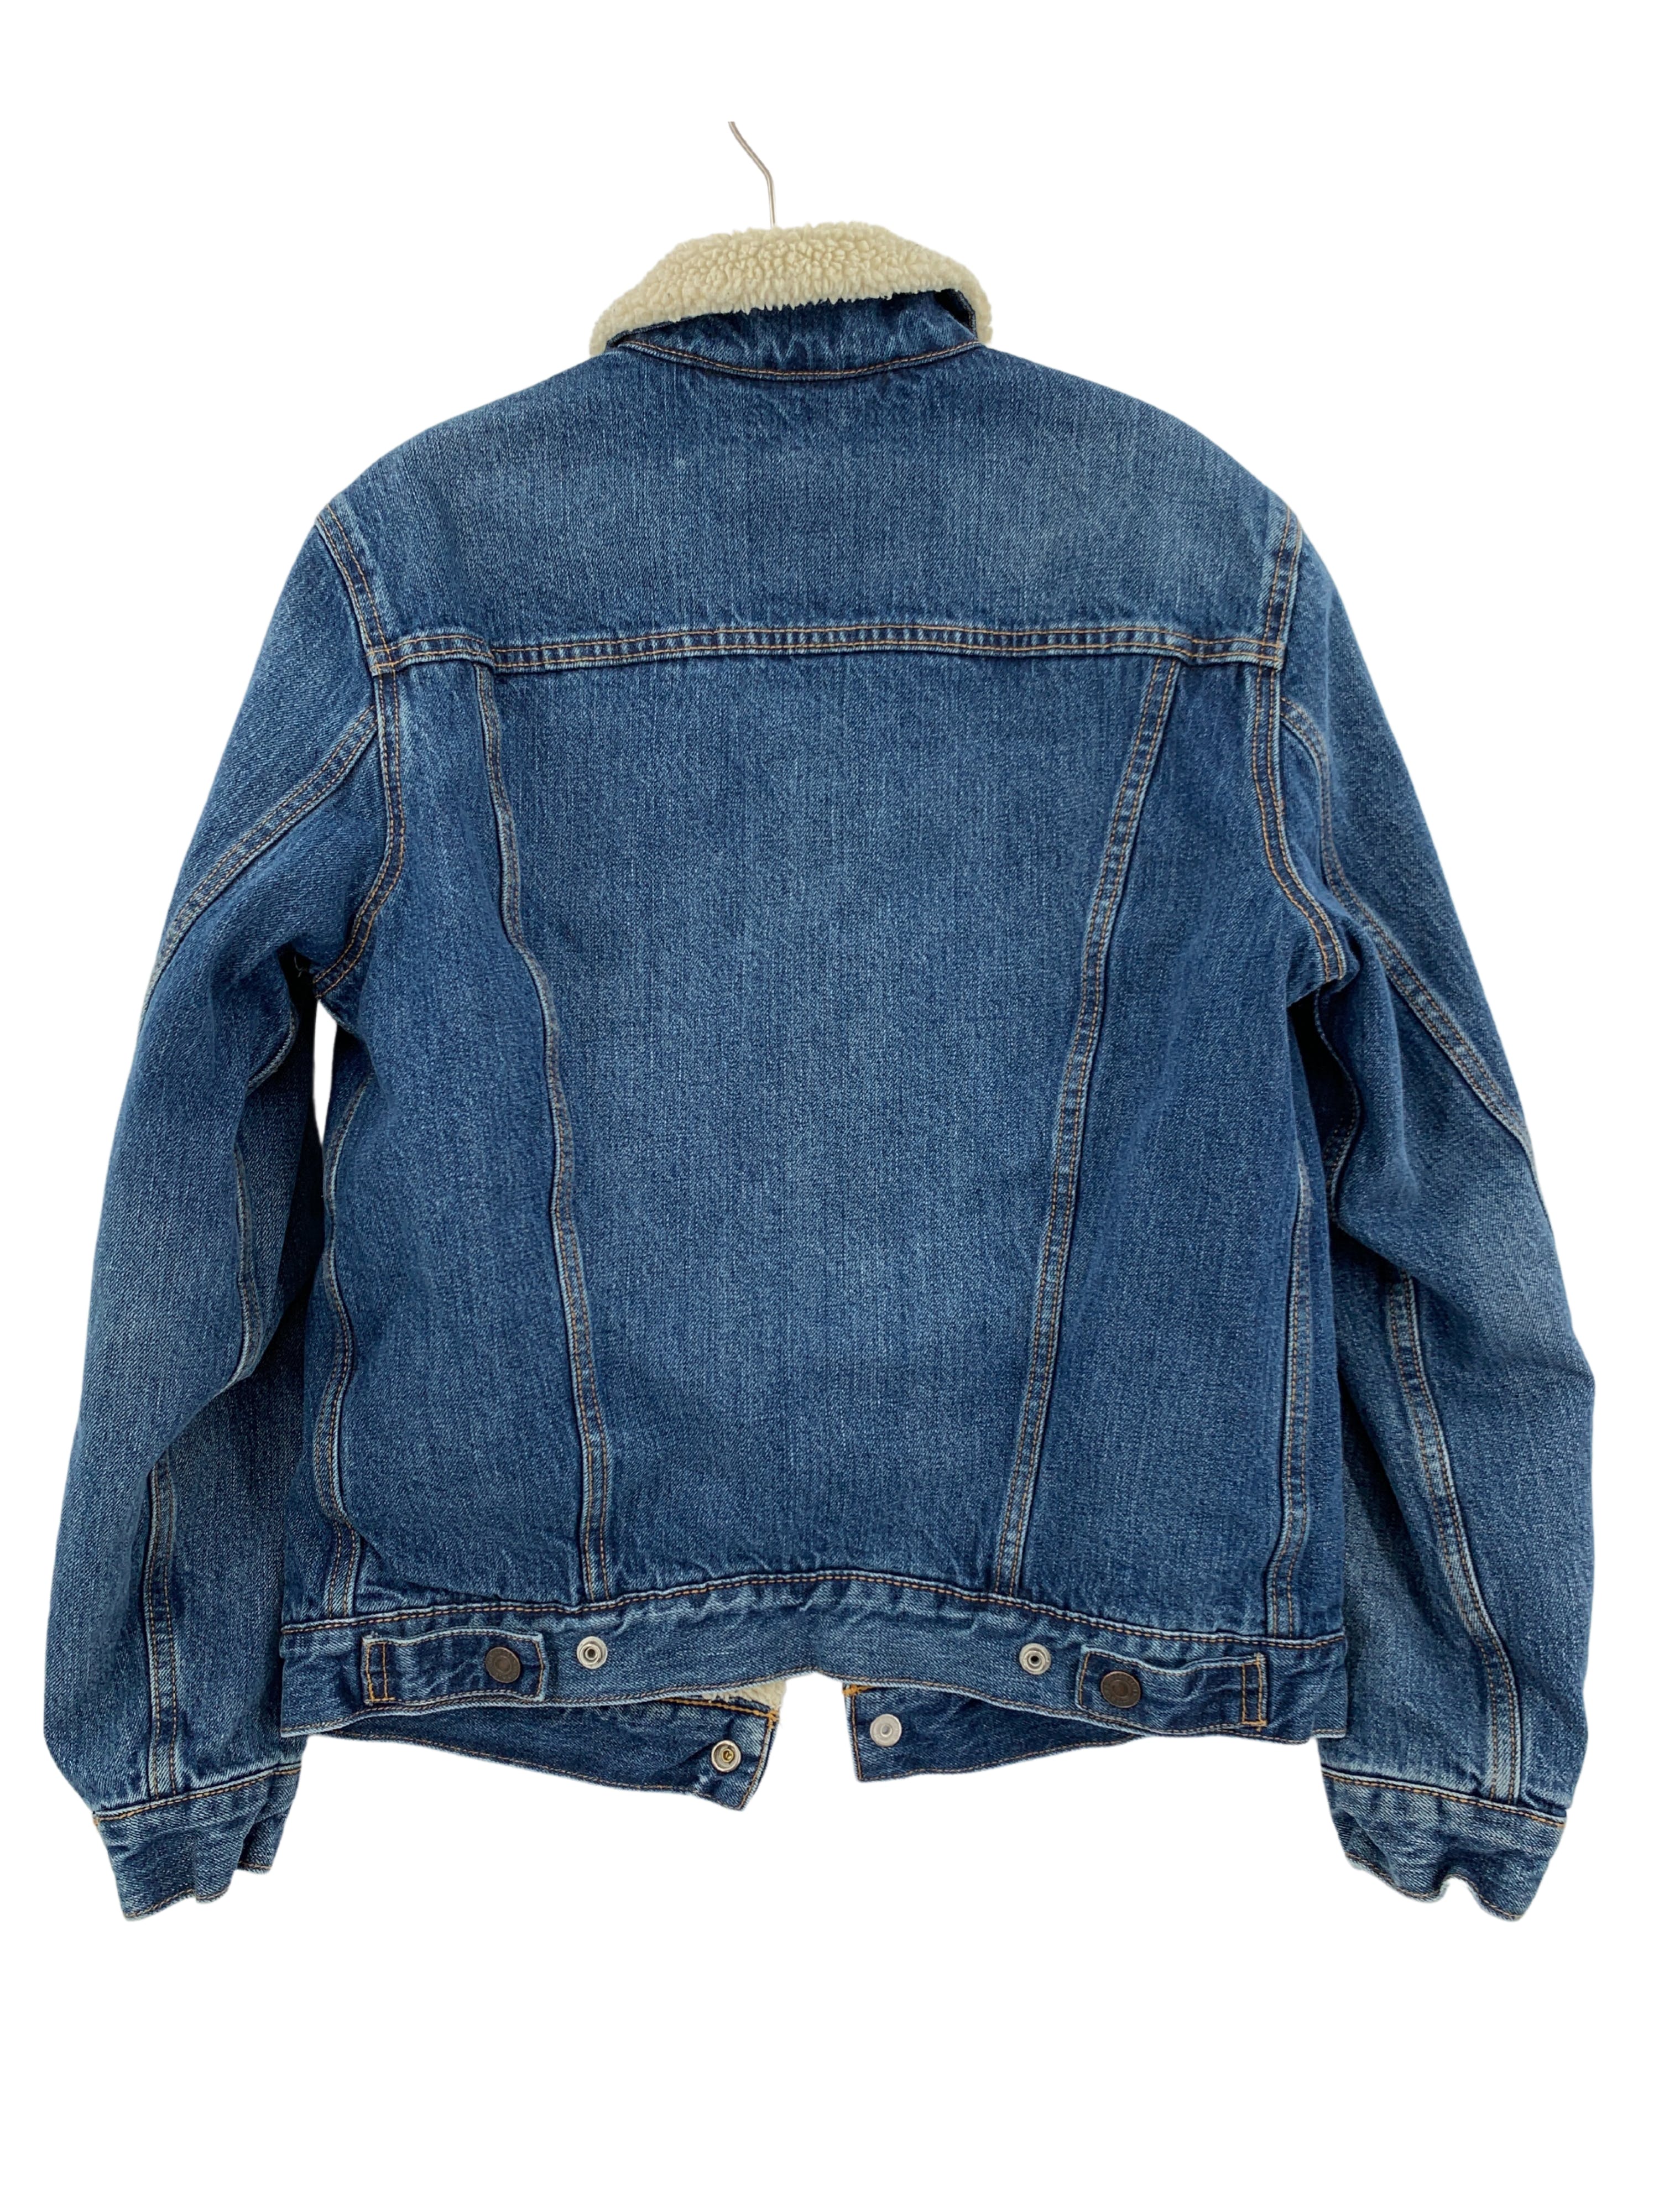 Vintage Sherpa Lined Denim Trucker Jacket by Levi's | Shop THRILLING